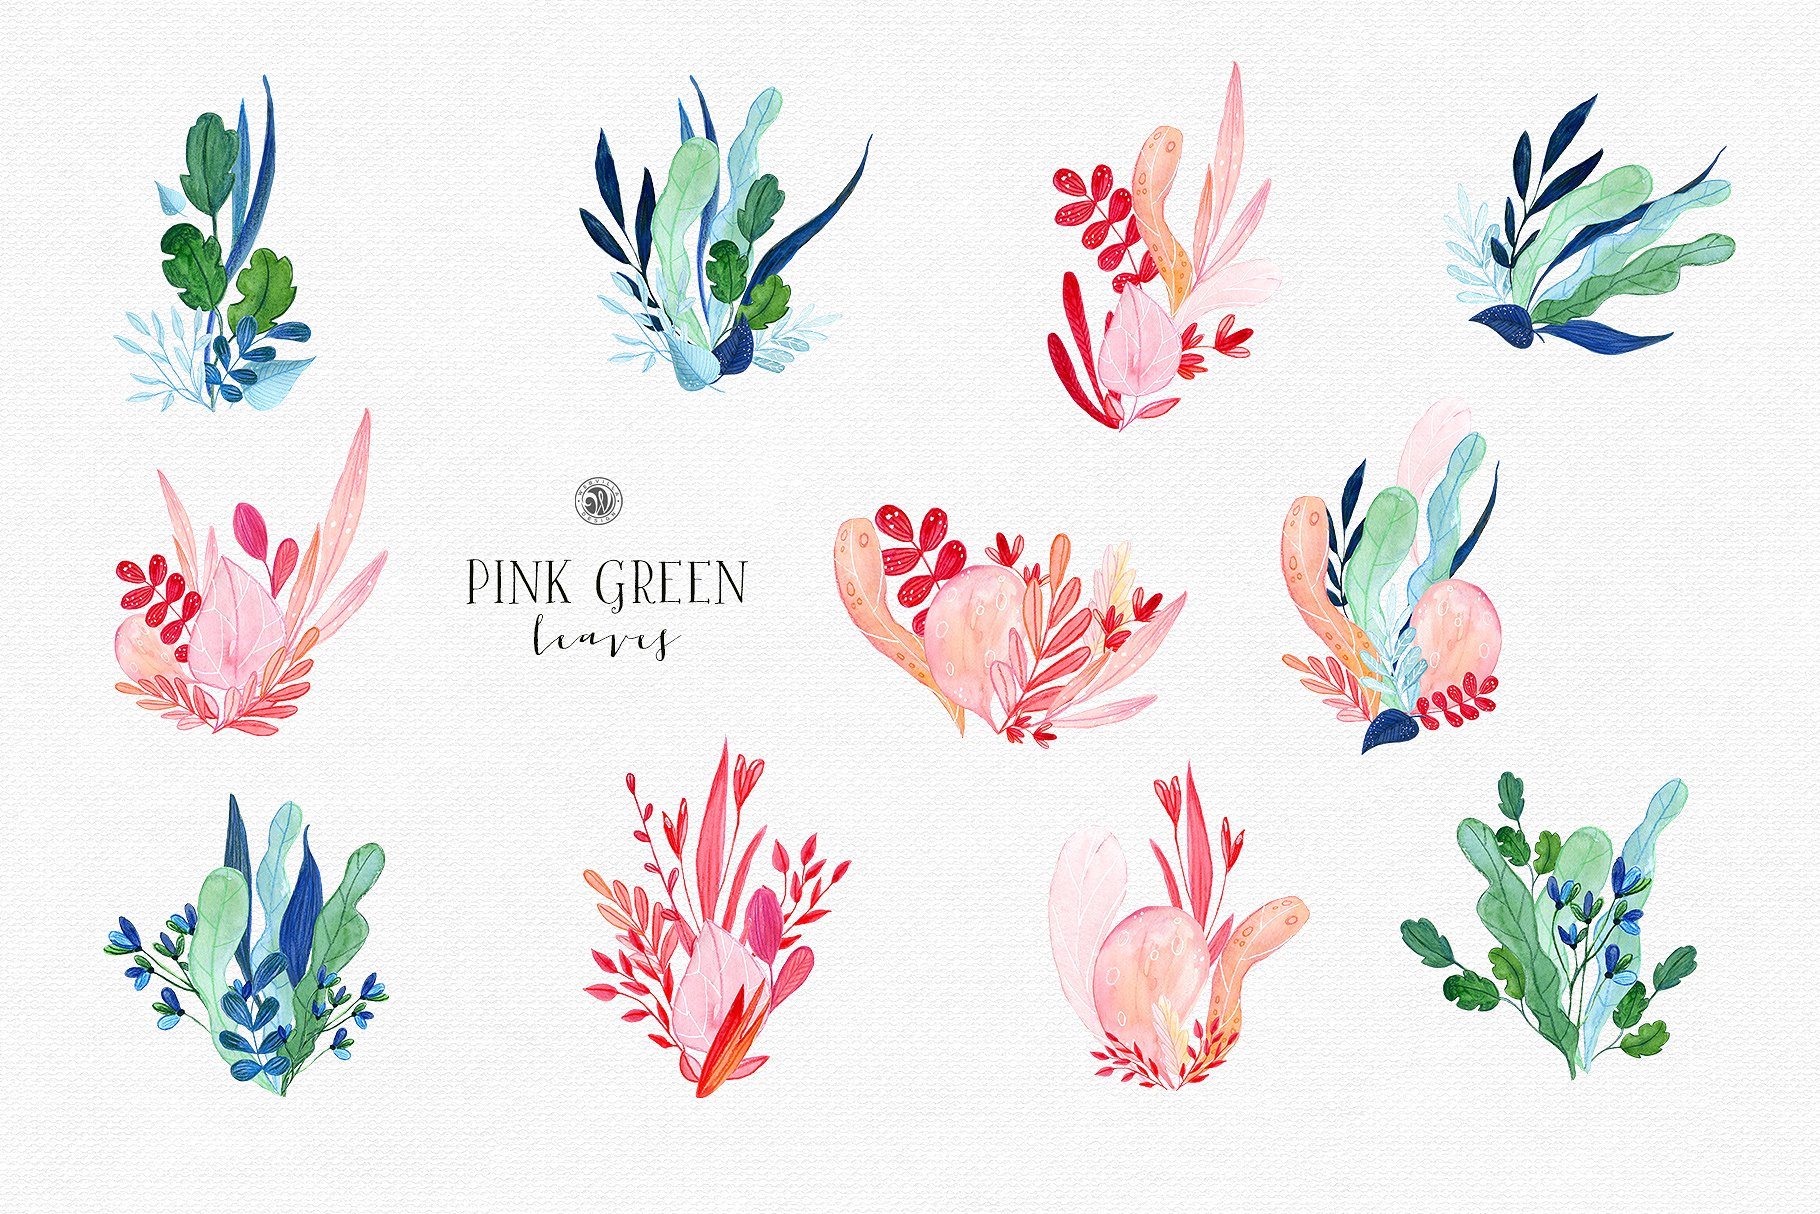 水彩手绘粉绿色叶子插画合集 Pink Green Leaves插图(7)